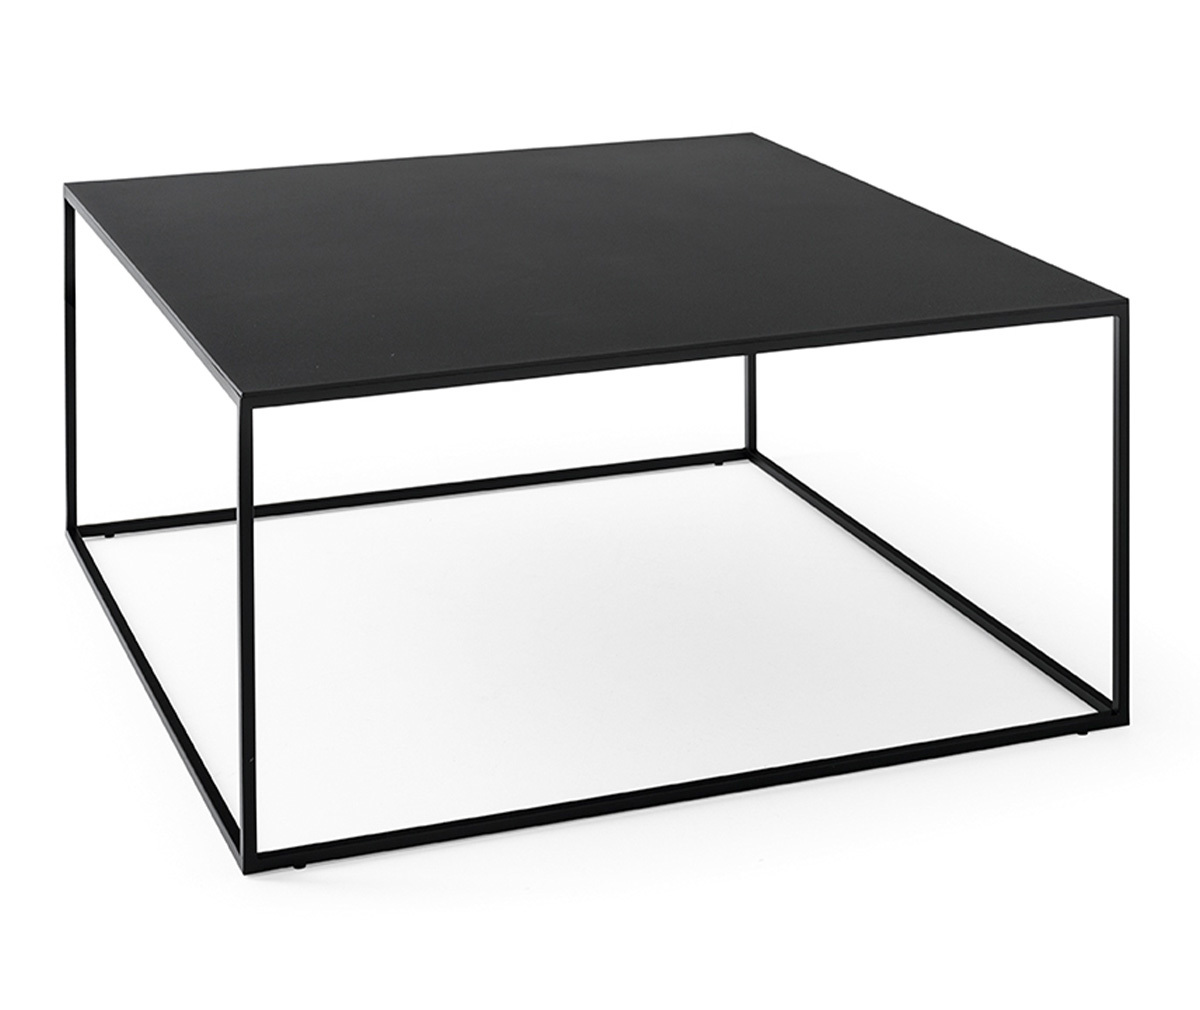 Calligaris Thin Coffee Table Black, 70 x 70 cm